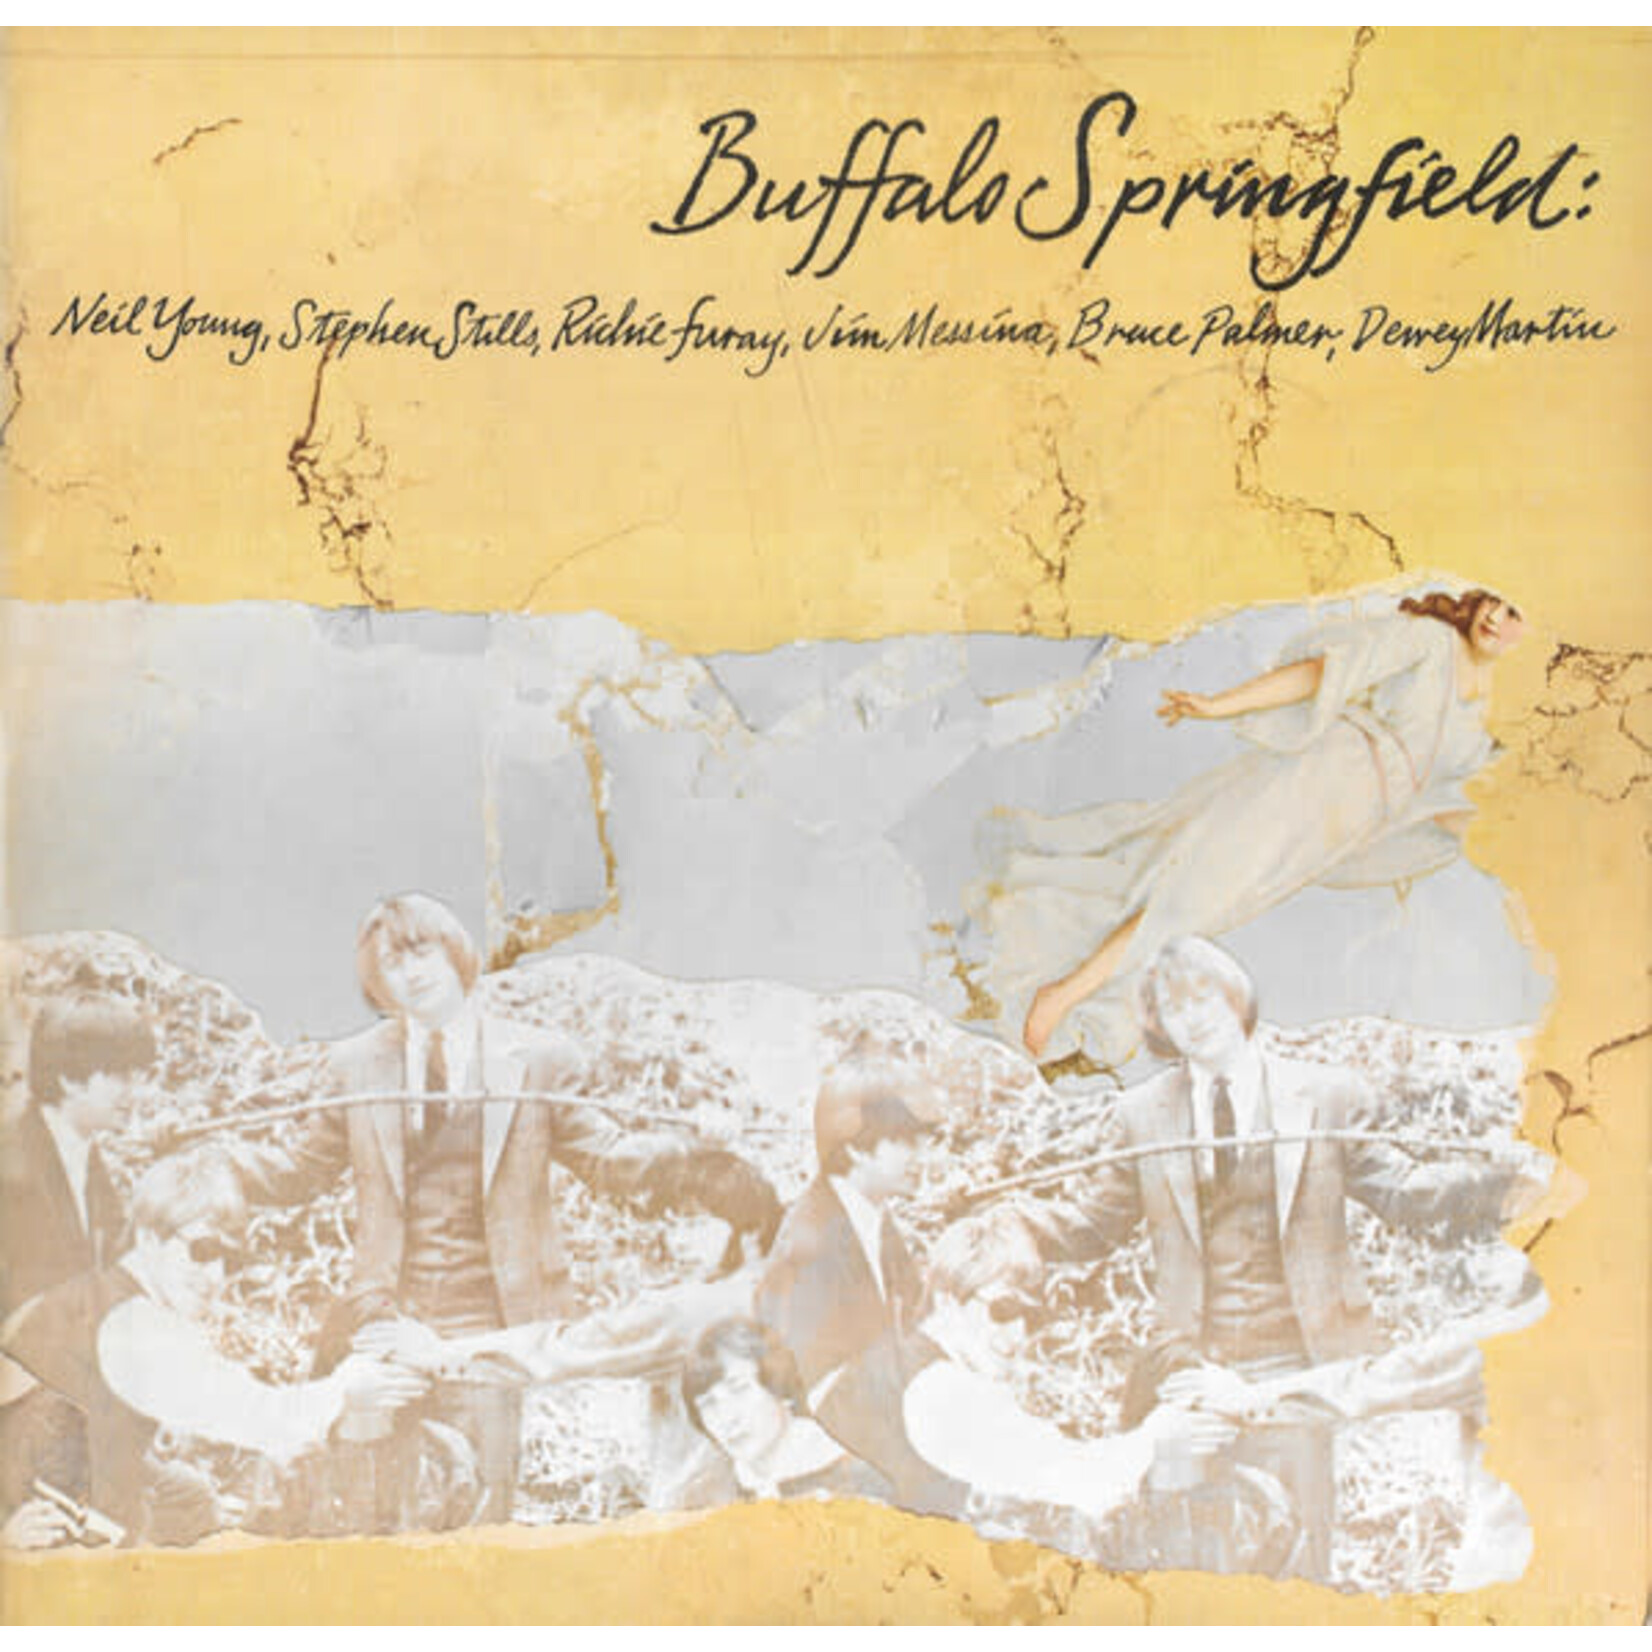 [Vintage] Buffalo Springfield - self-titled (2LP)